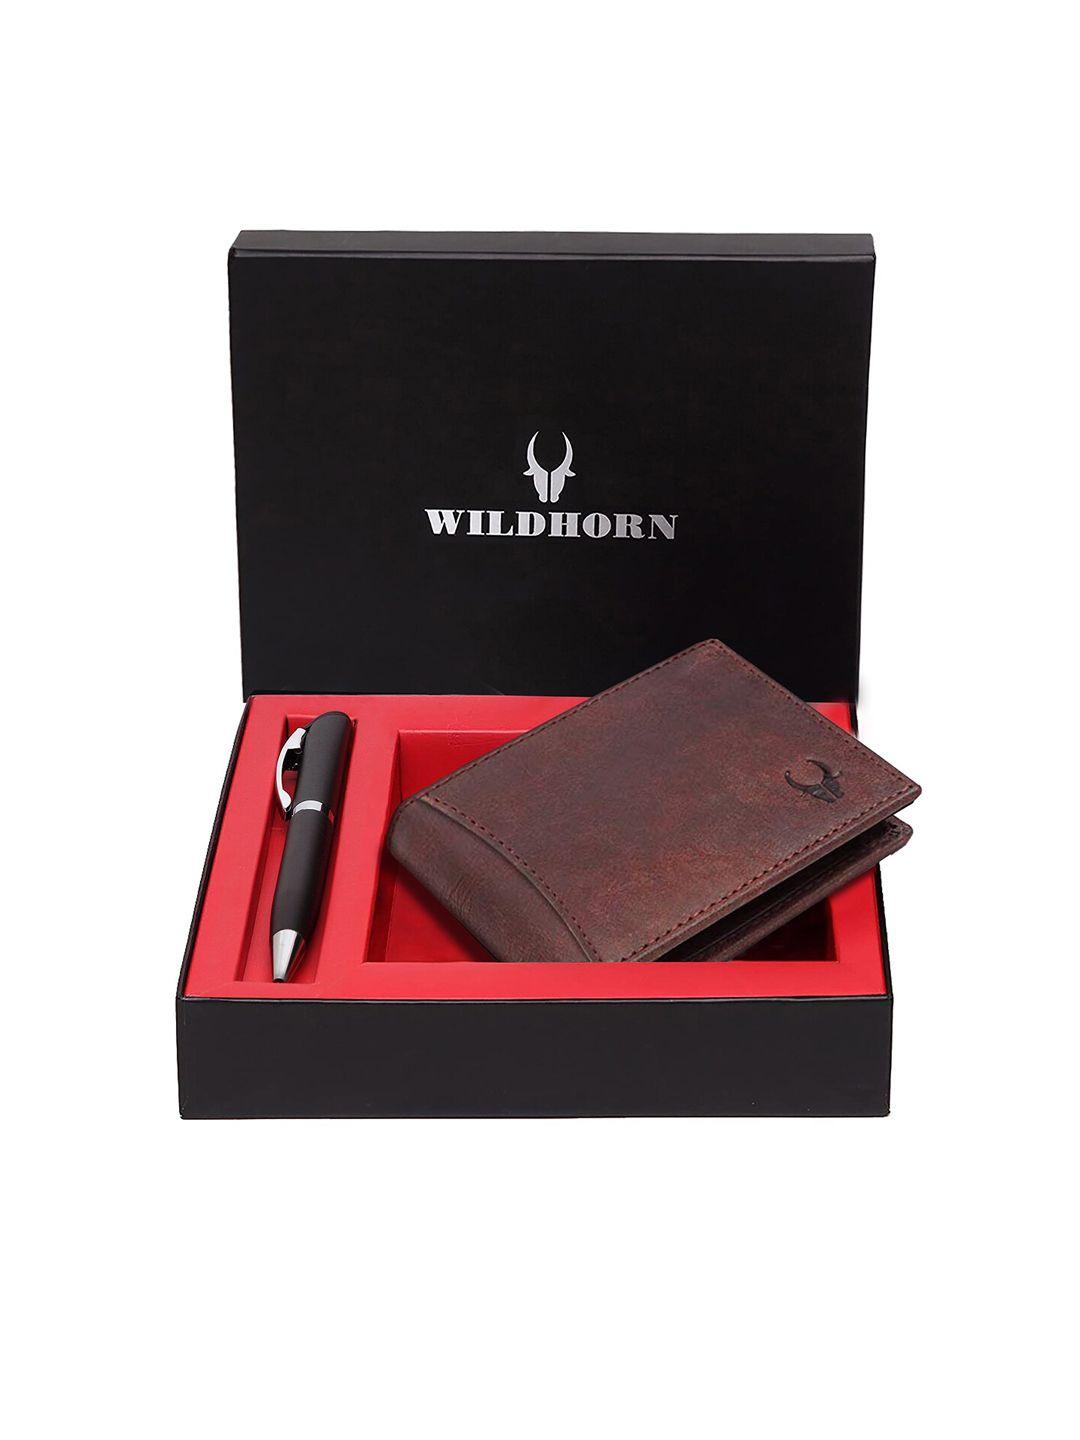 wildhorn men brown & black rfid protected genuine leather accessory gift set